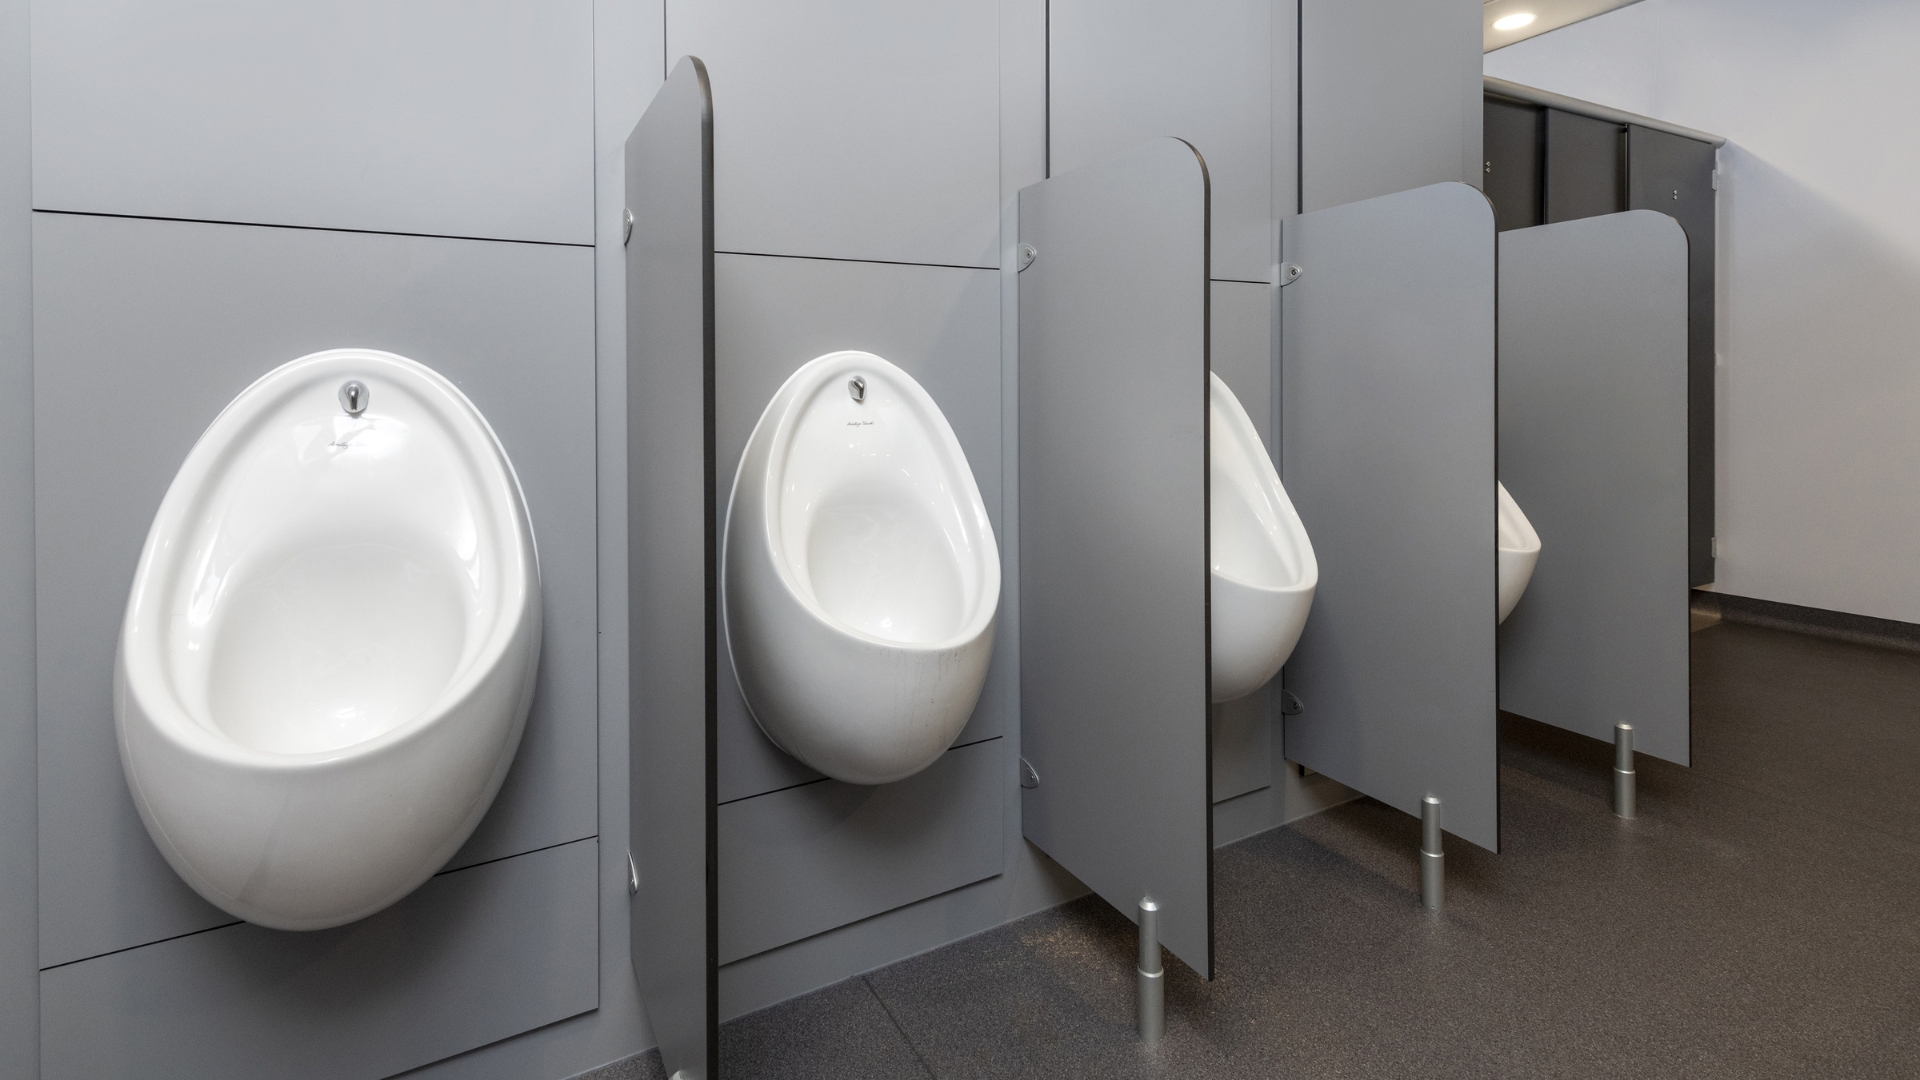 Washroom Fit-Out Company Urmston Grammar School project